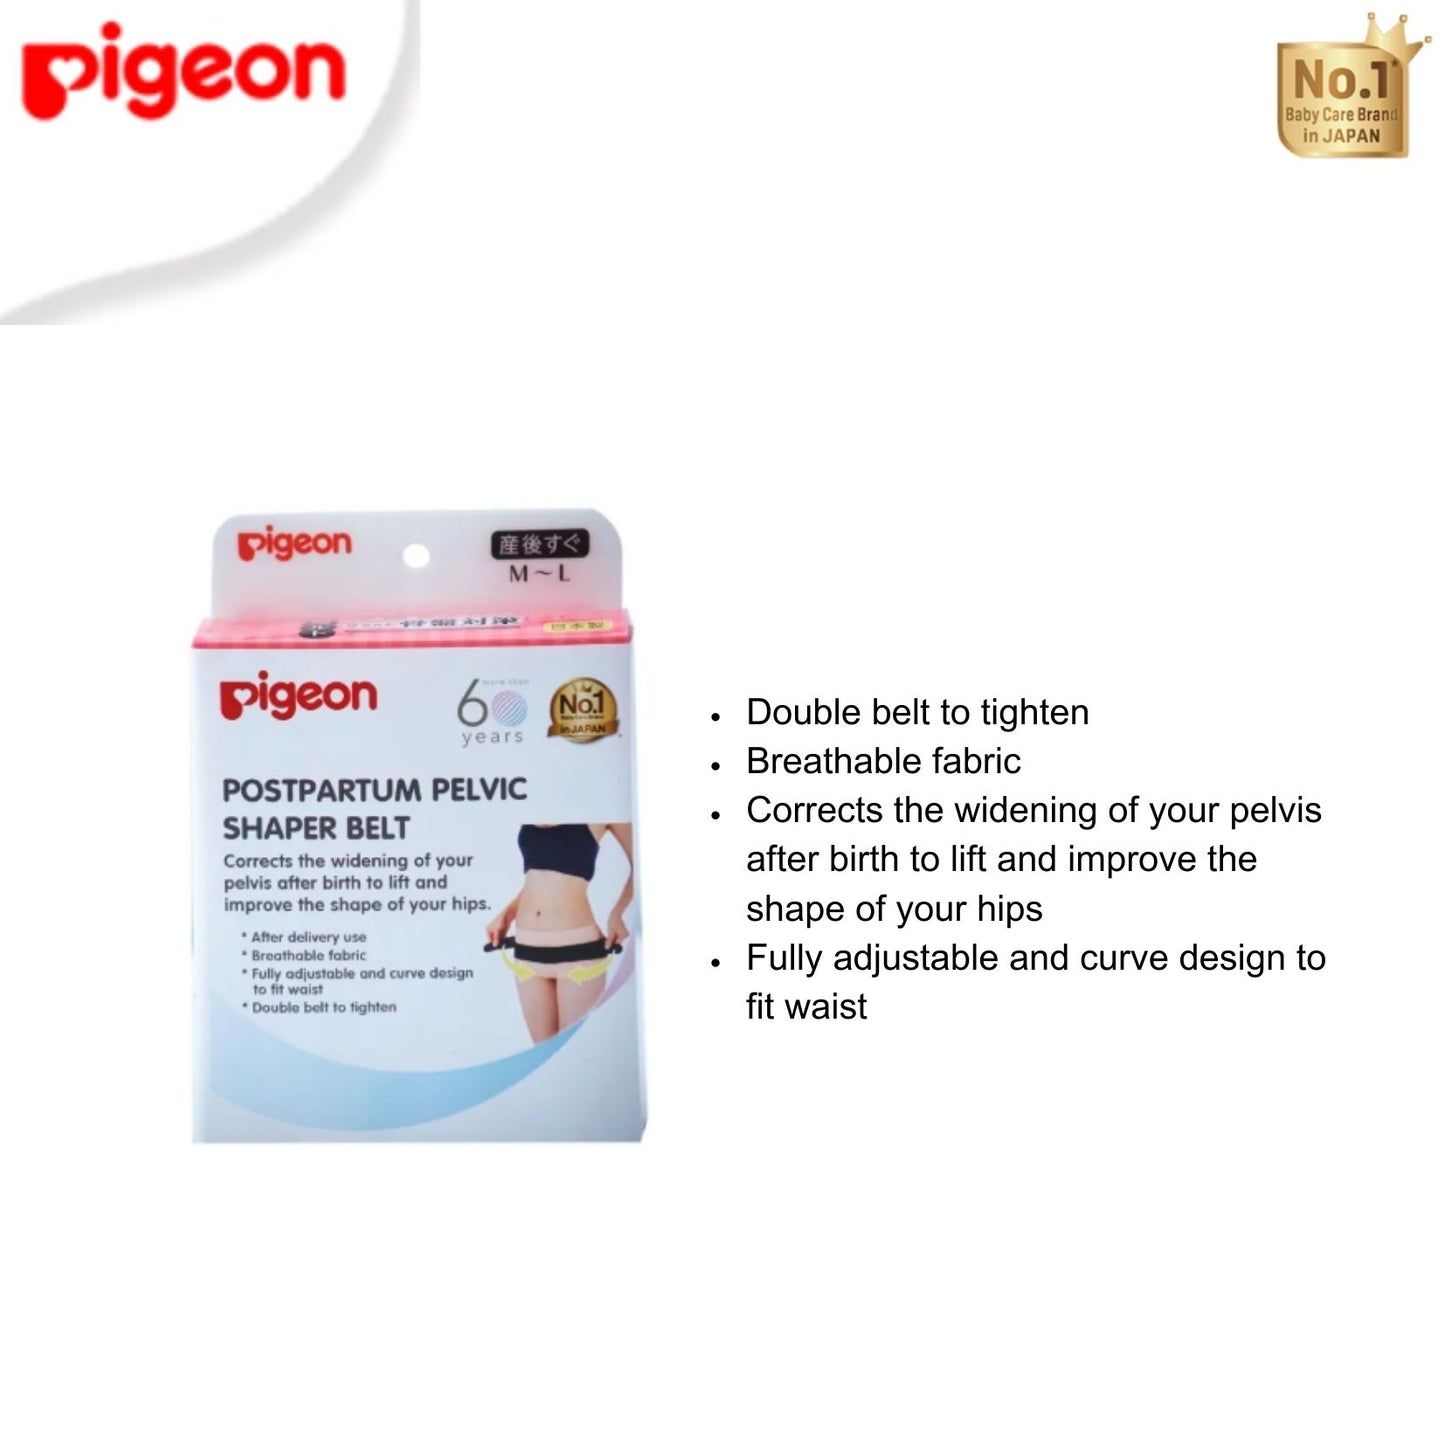 Pigeon Postpartum Pelvic Shaper Belt